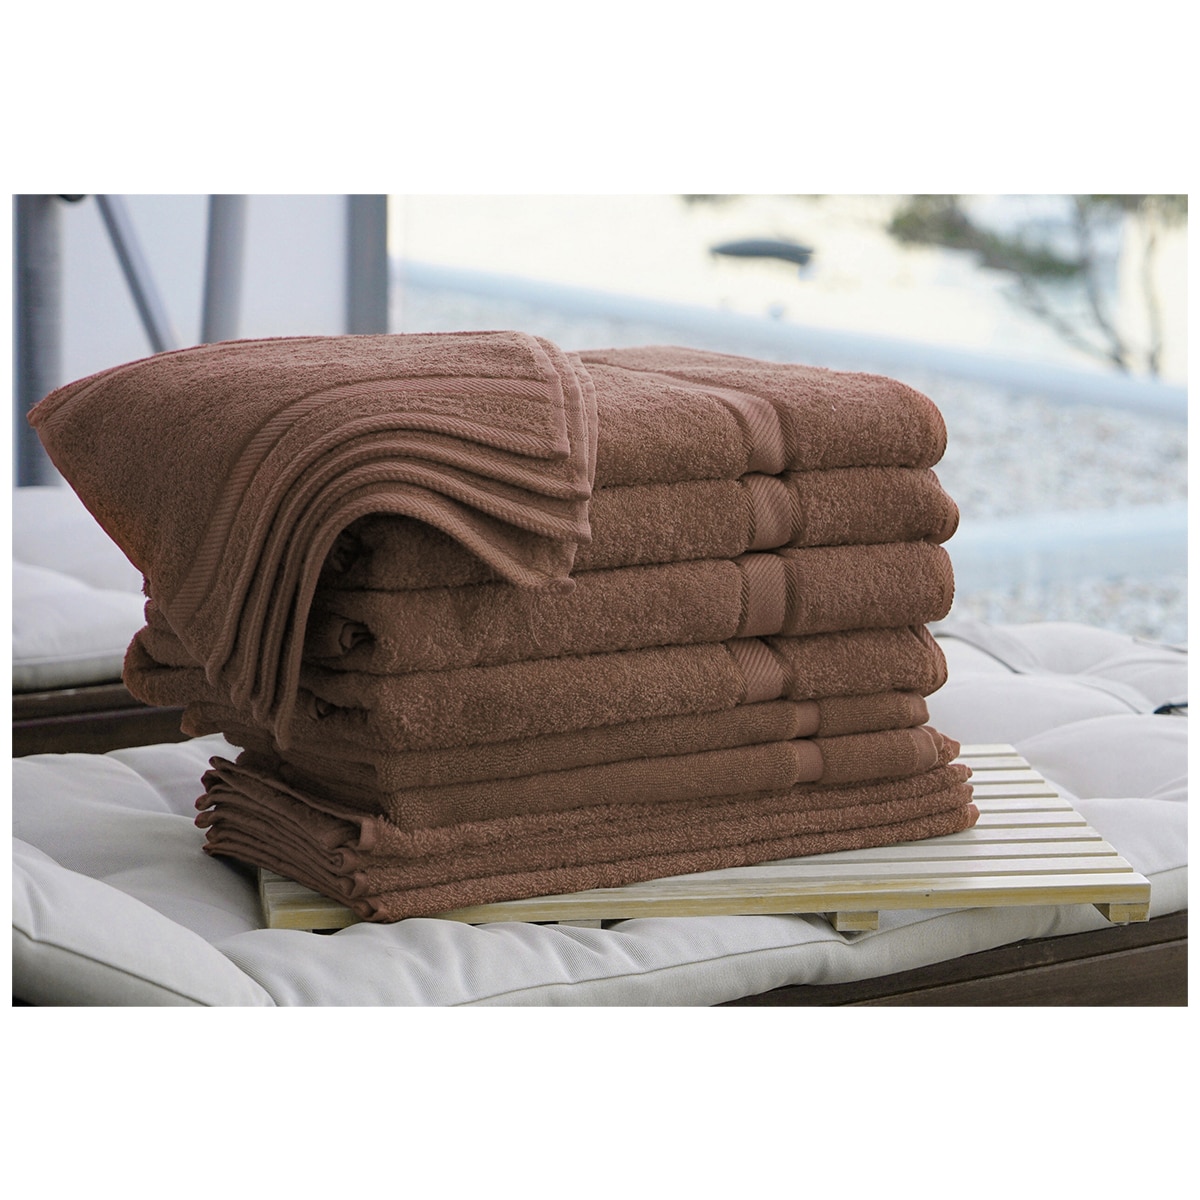 Kingtex Plain dyed 100% Combed Cotton towel range 550gsm Bath Sheet set 14 piece - Chocolate